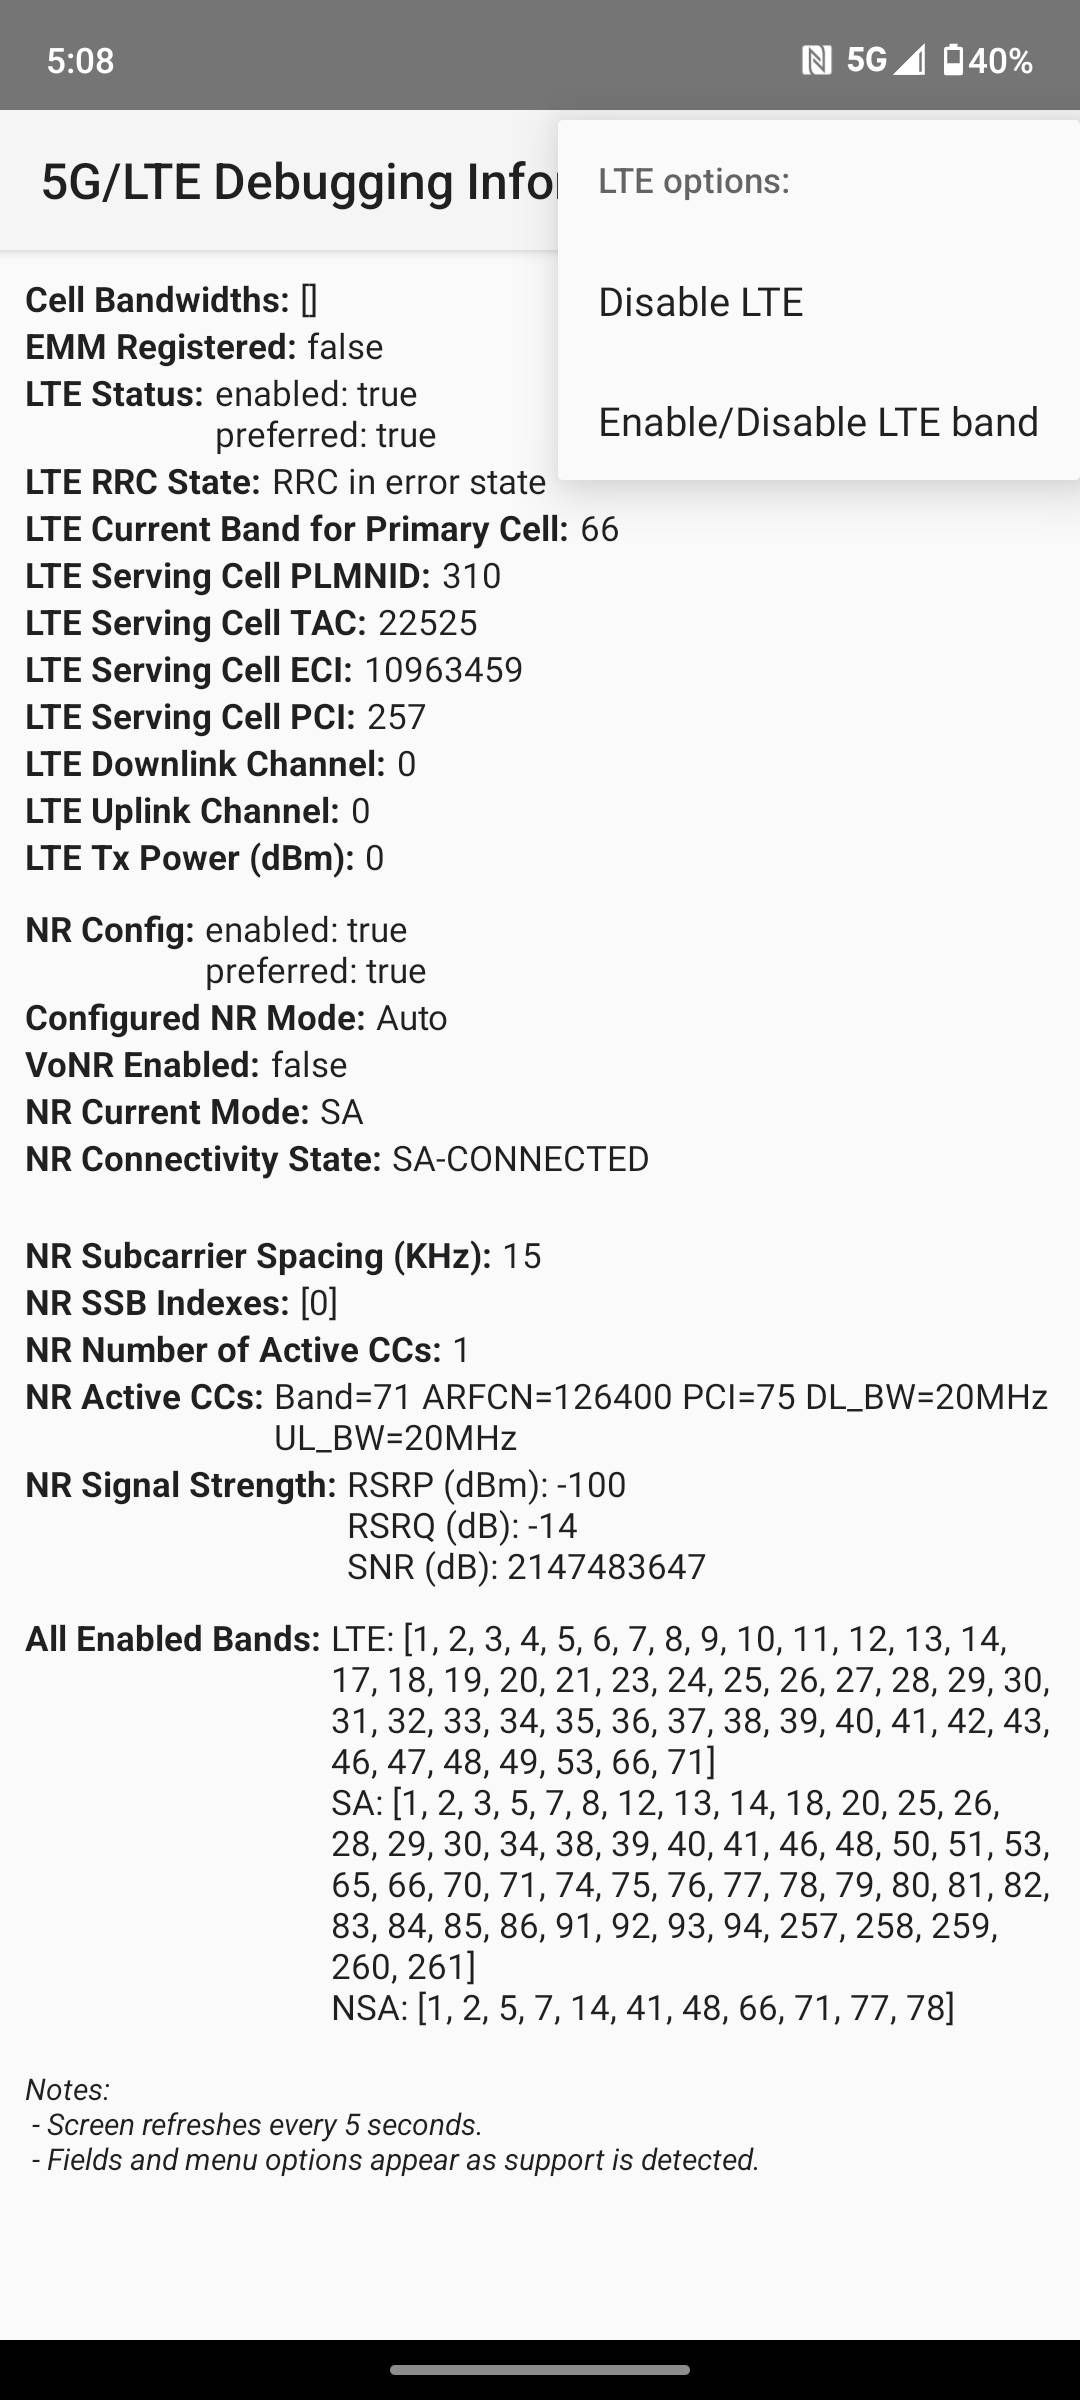 Motorola's debugging menu with options to disable LTE.